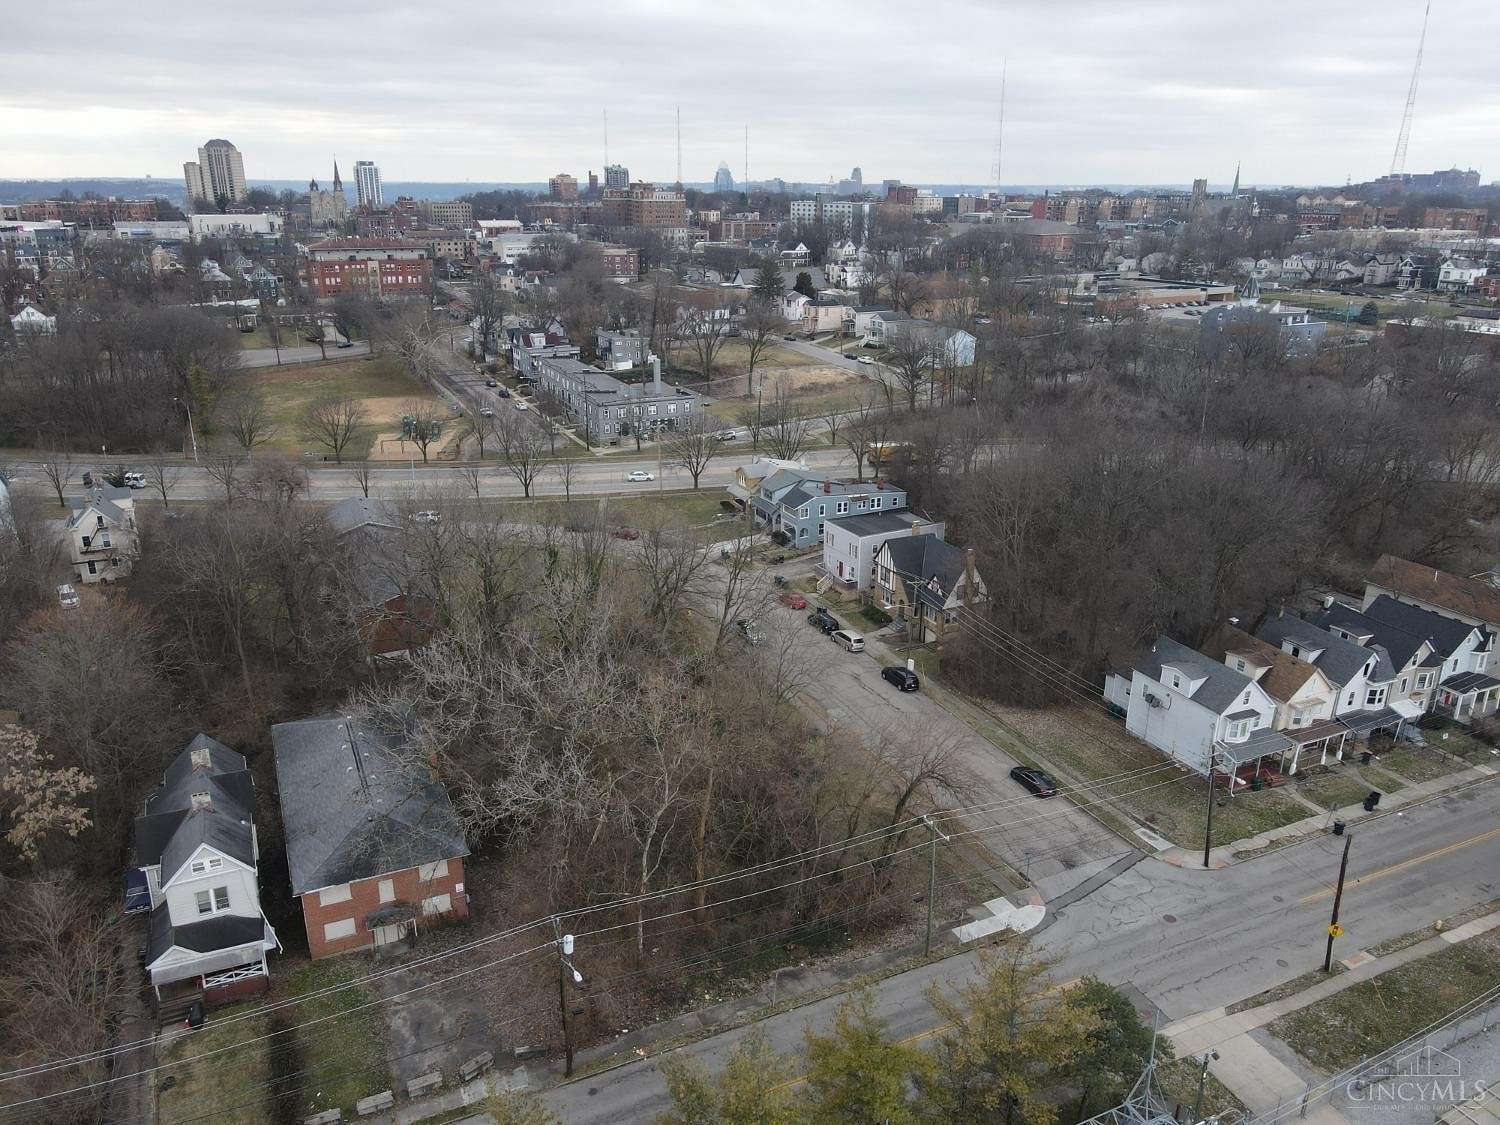 0.19 Acres of Residential Land for Sale in Cincinnati, Ohio